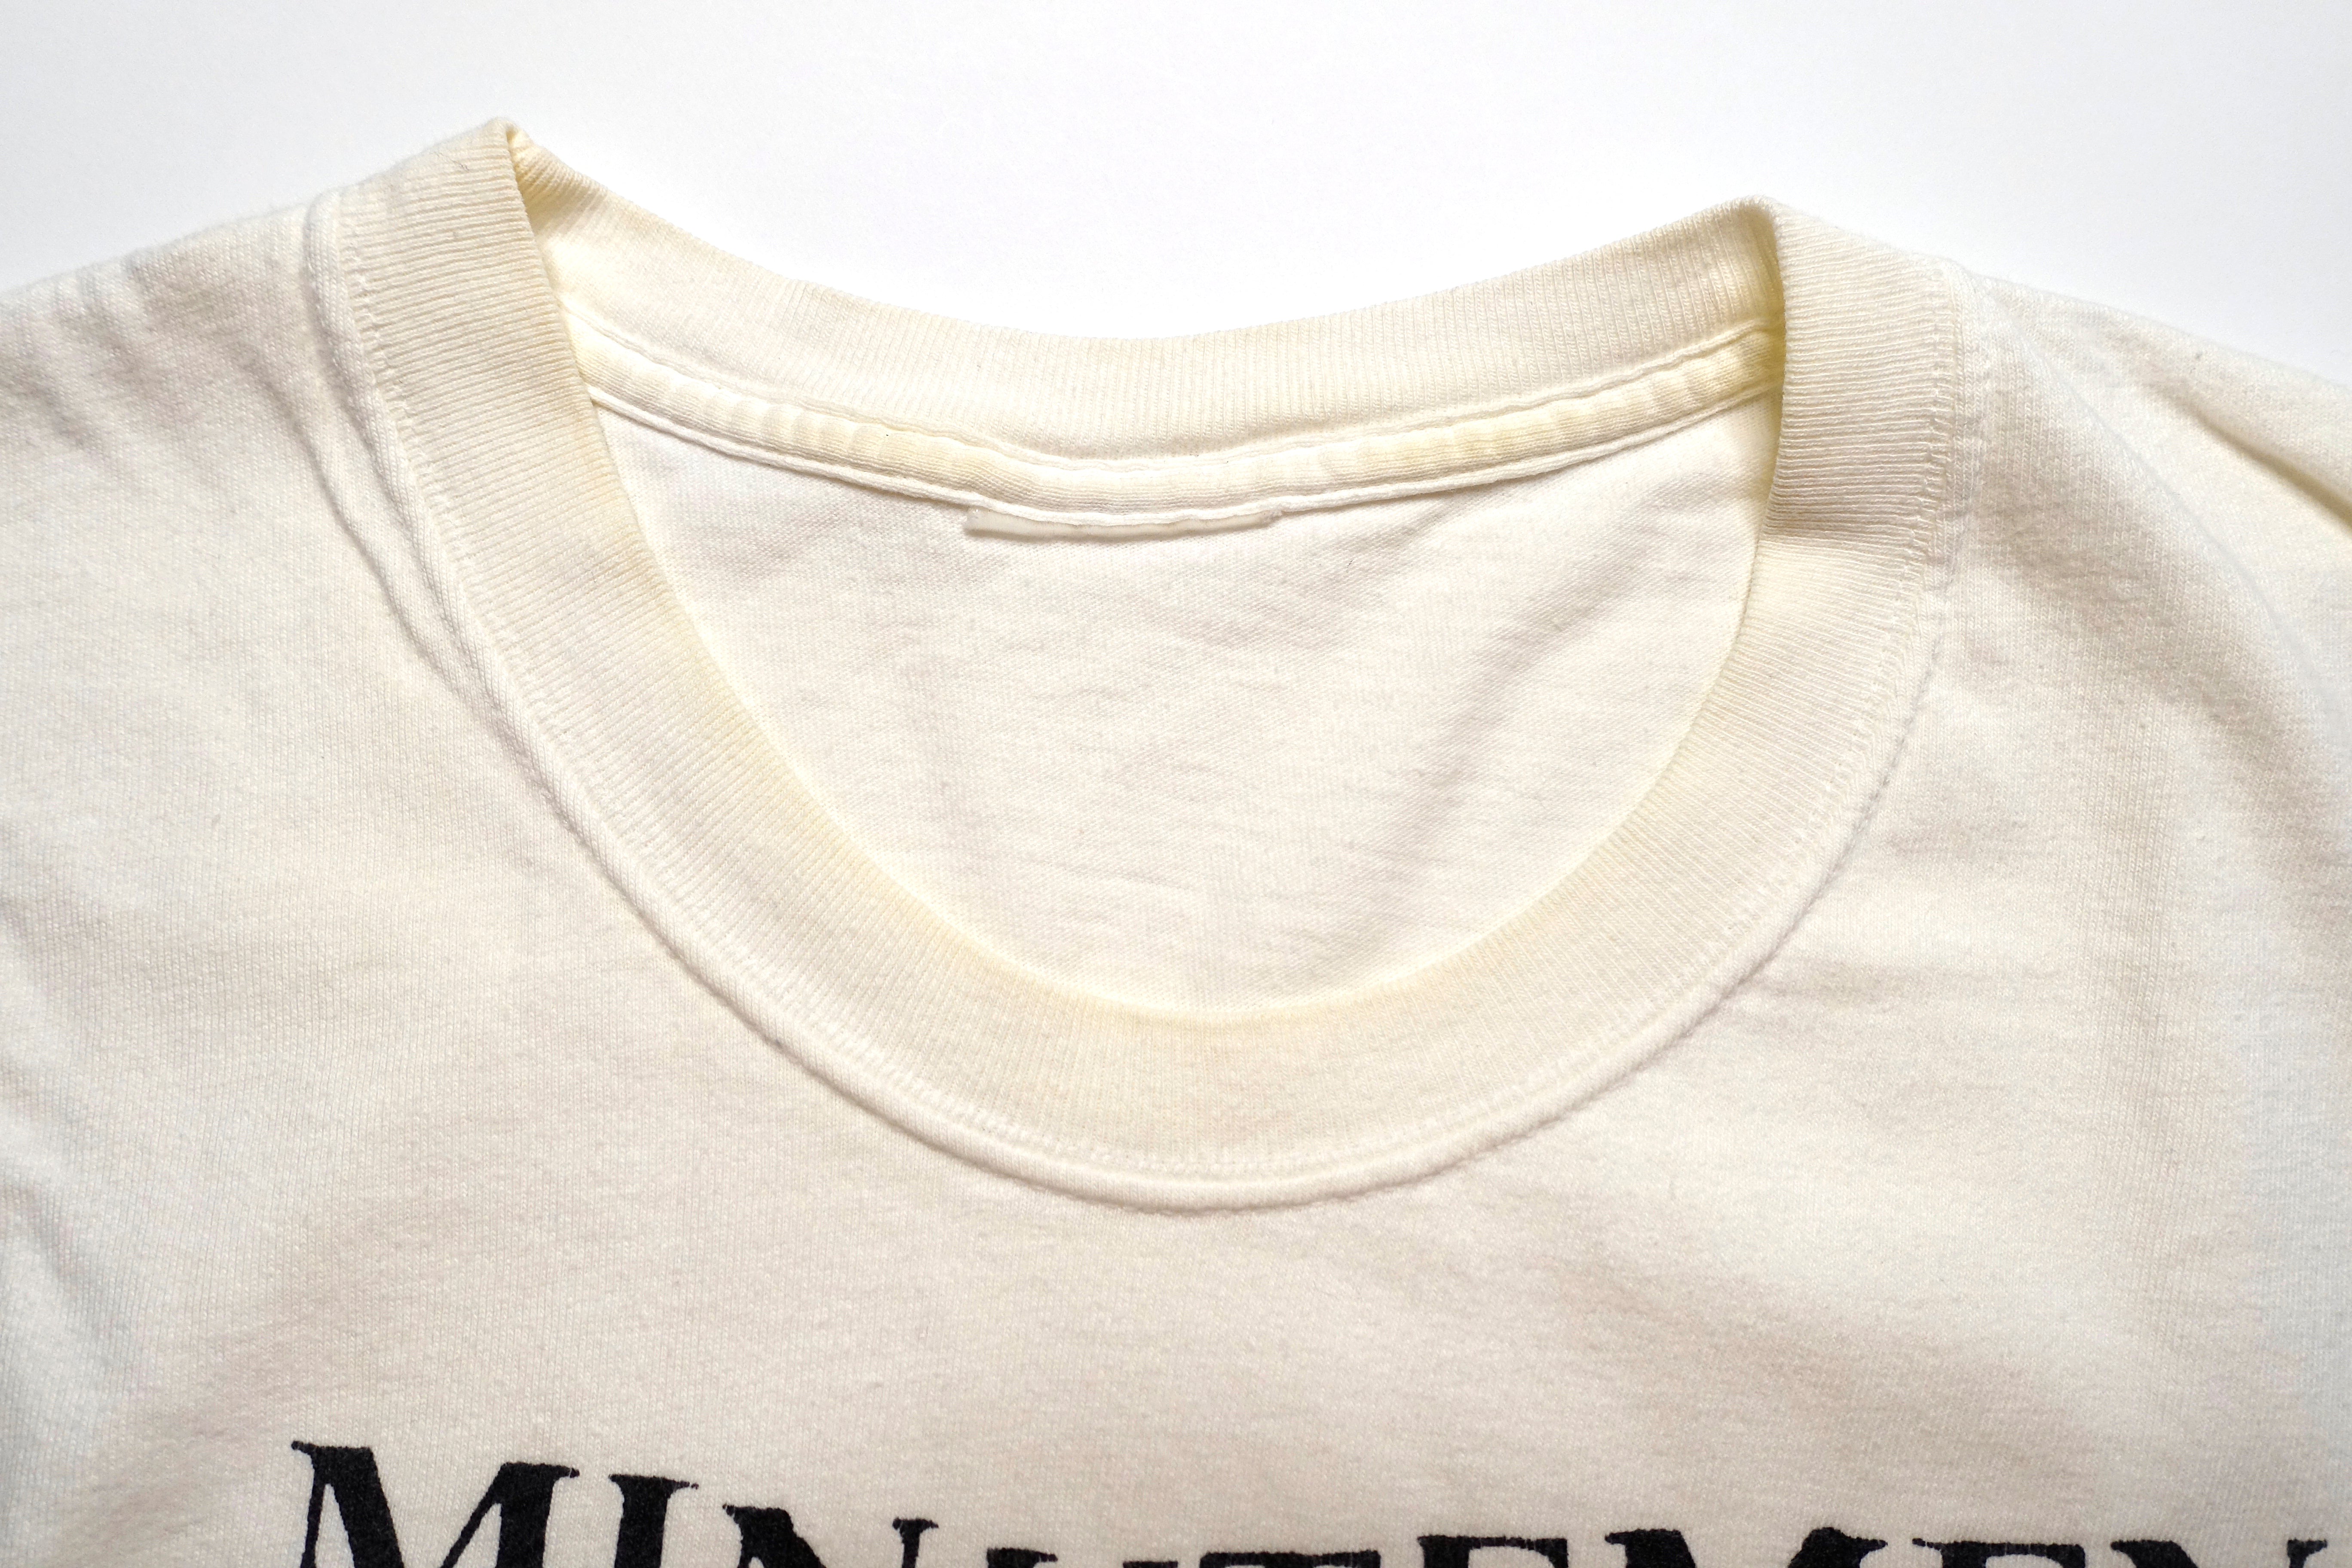 Minutemen - What Makes A Man Start Fires? 00's Shirt Size Large